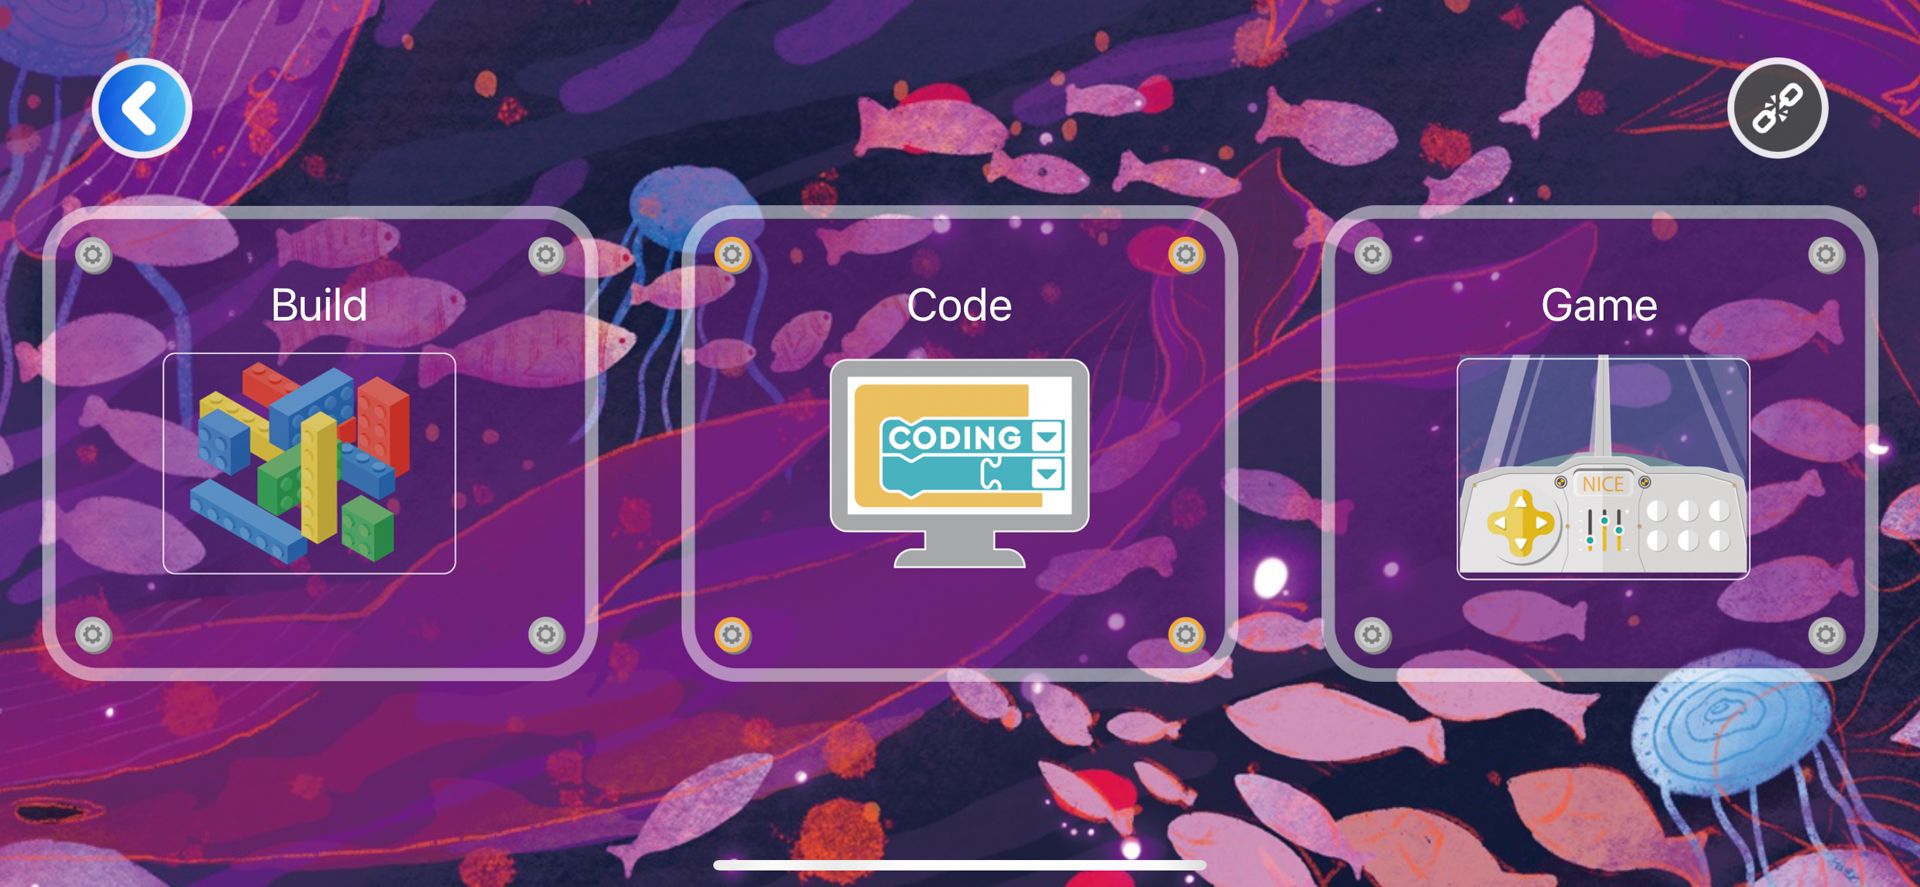 magic curie stem for girls - screenshot code build remote